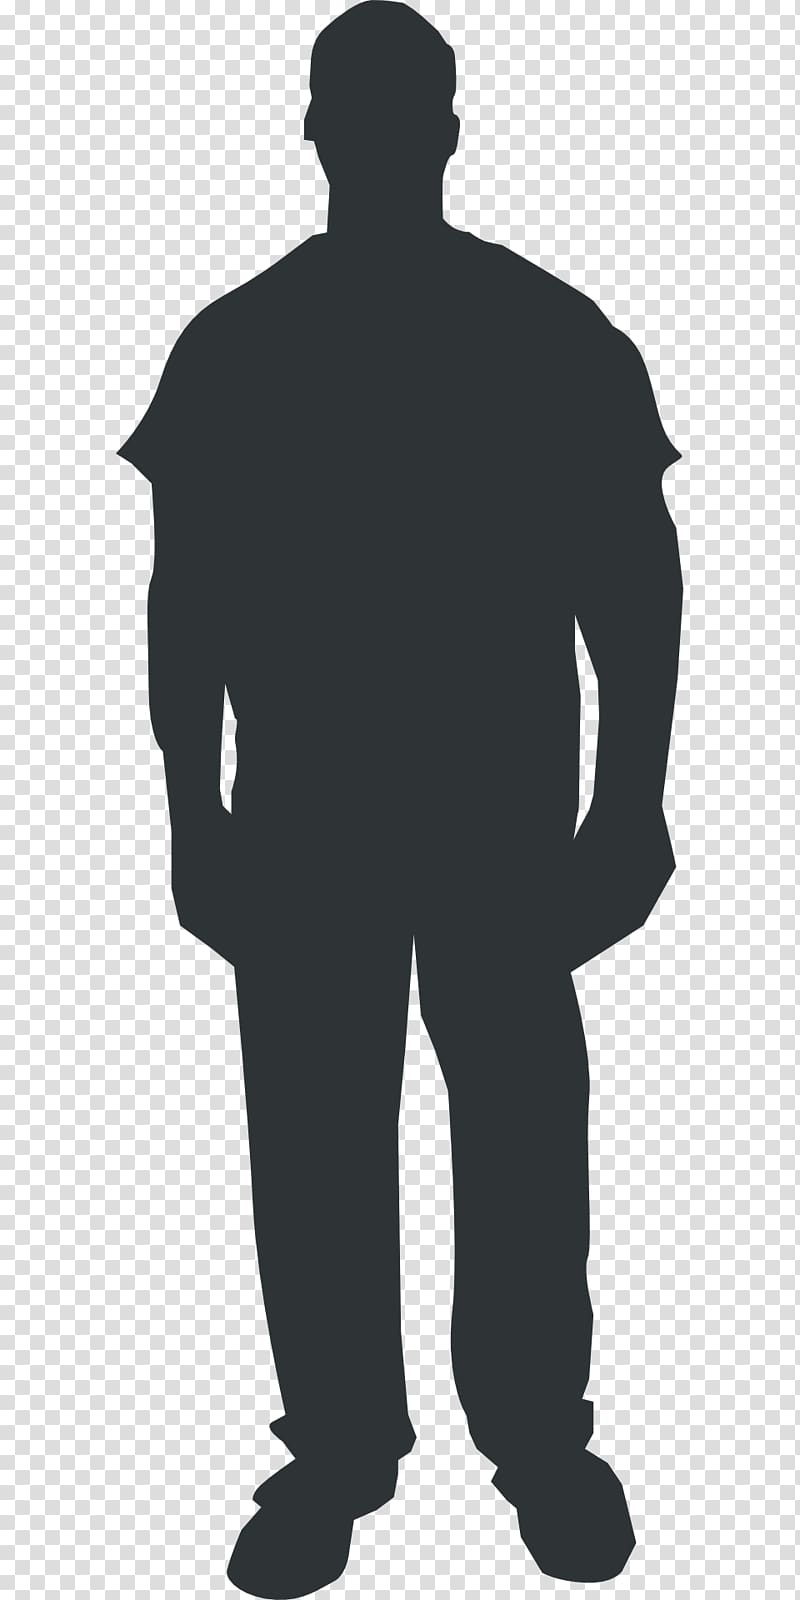 Homo sapiens Person , silhouette man transparent background.